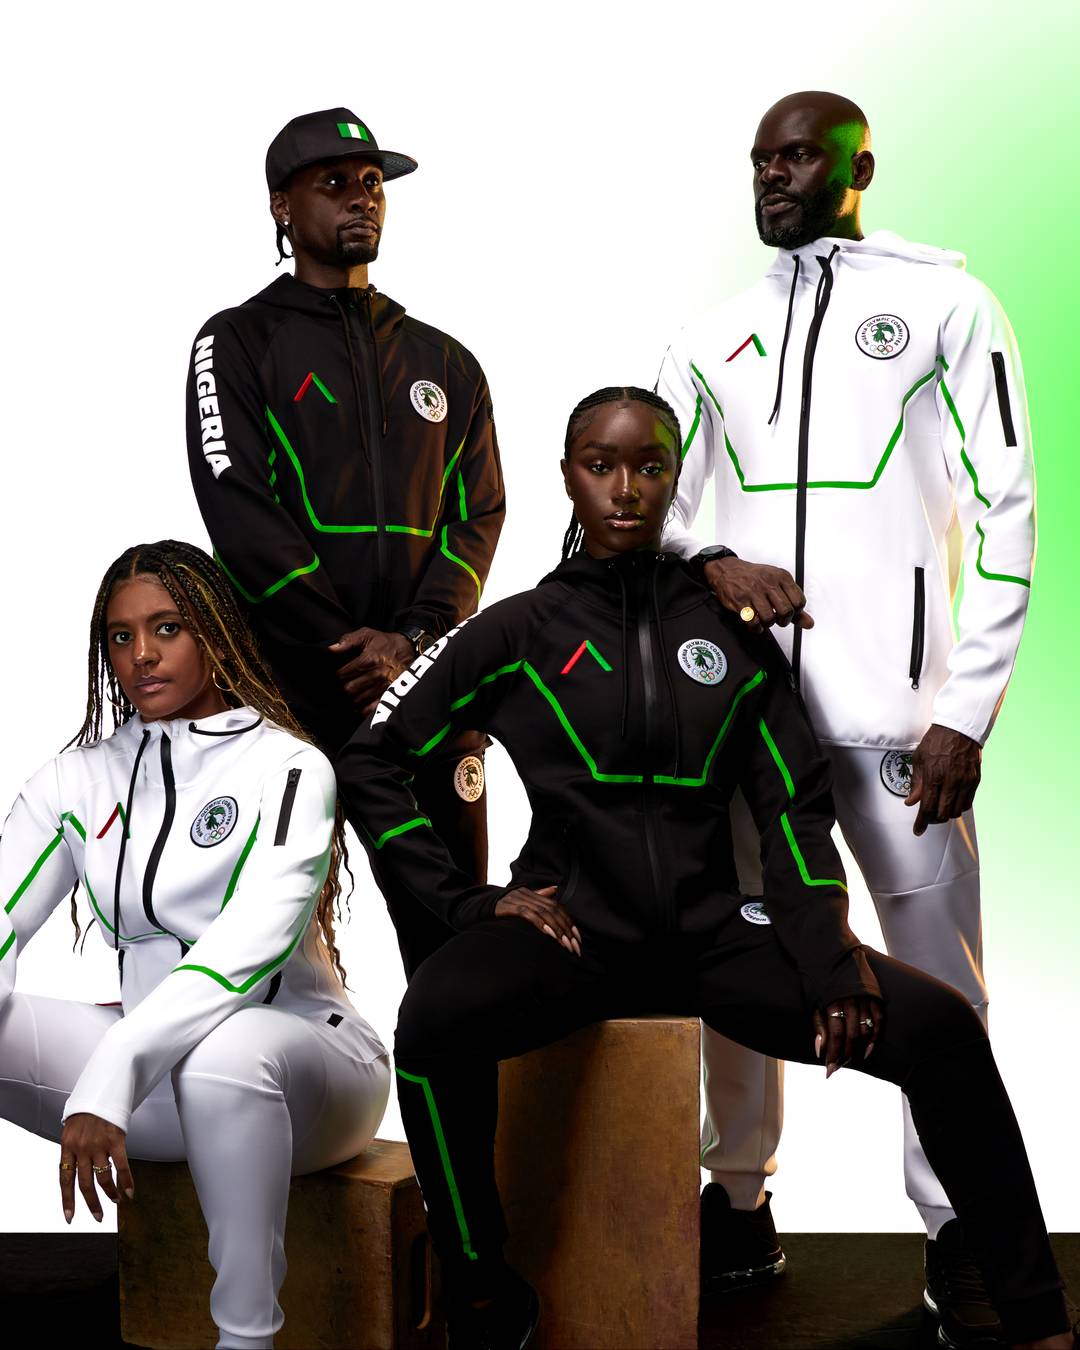 Team Nigeria-uniformen van Actively Black.